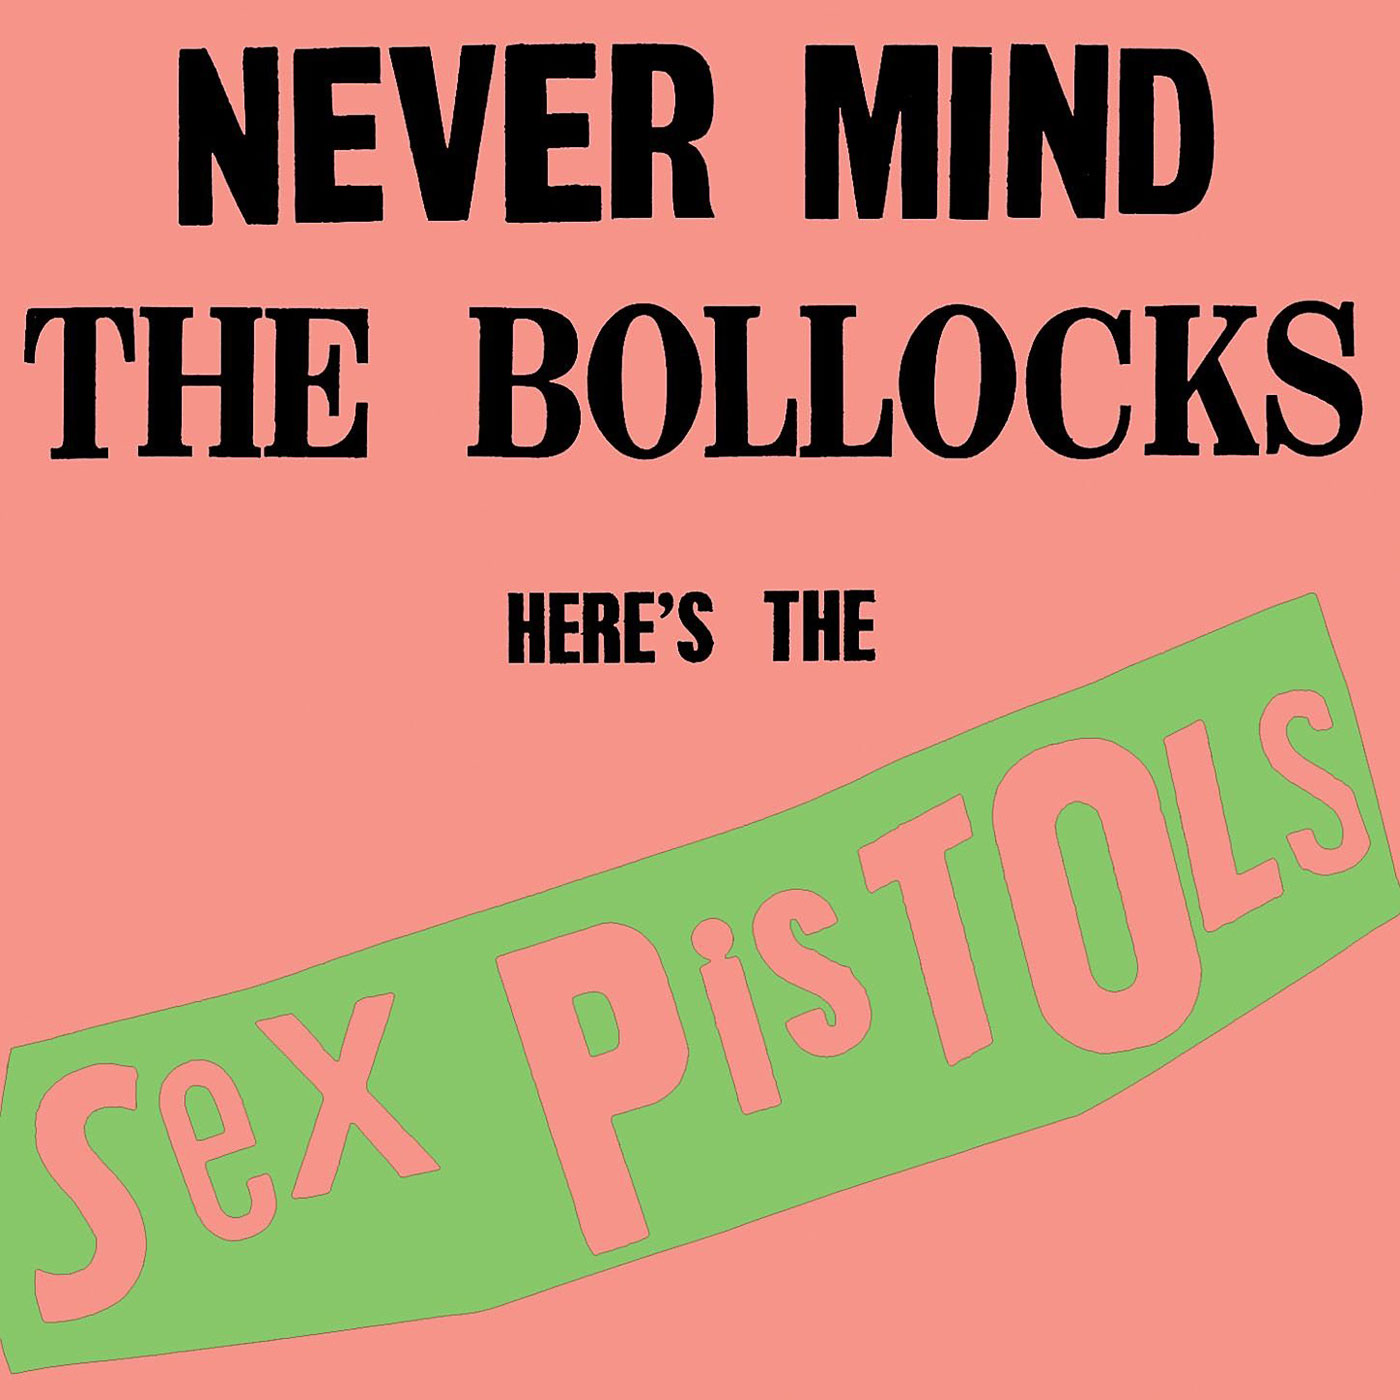 394 Sex Pistols – Never Mind the Bollocks Here’s the Sex Pistols